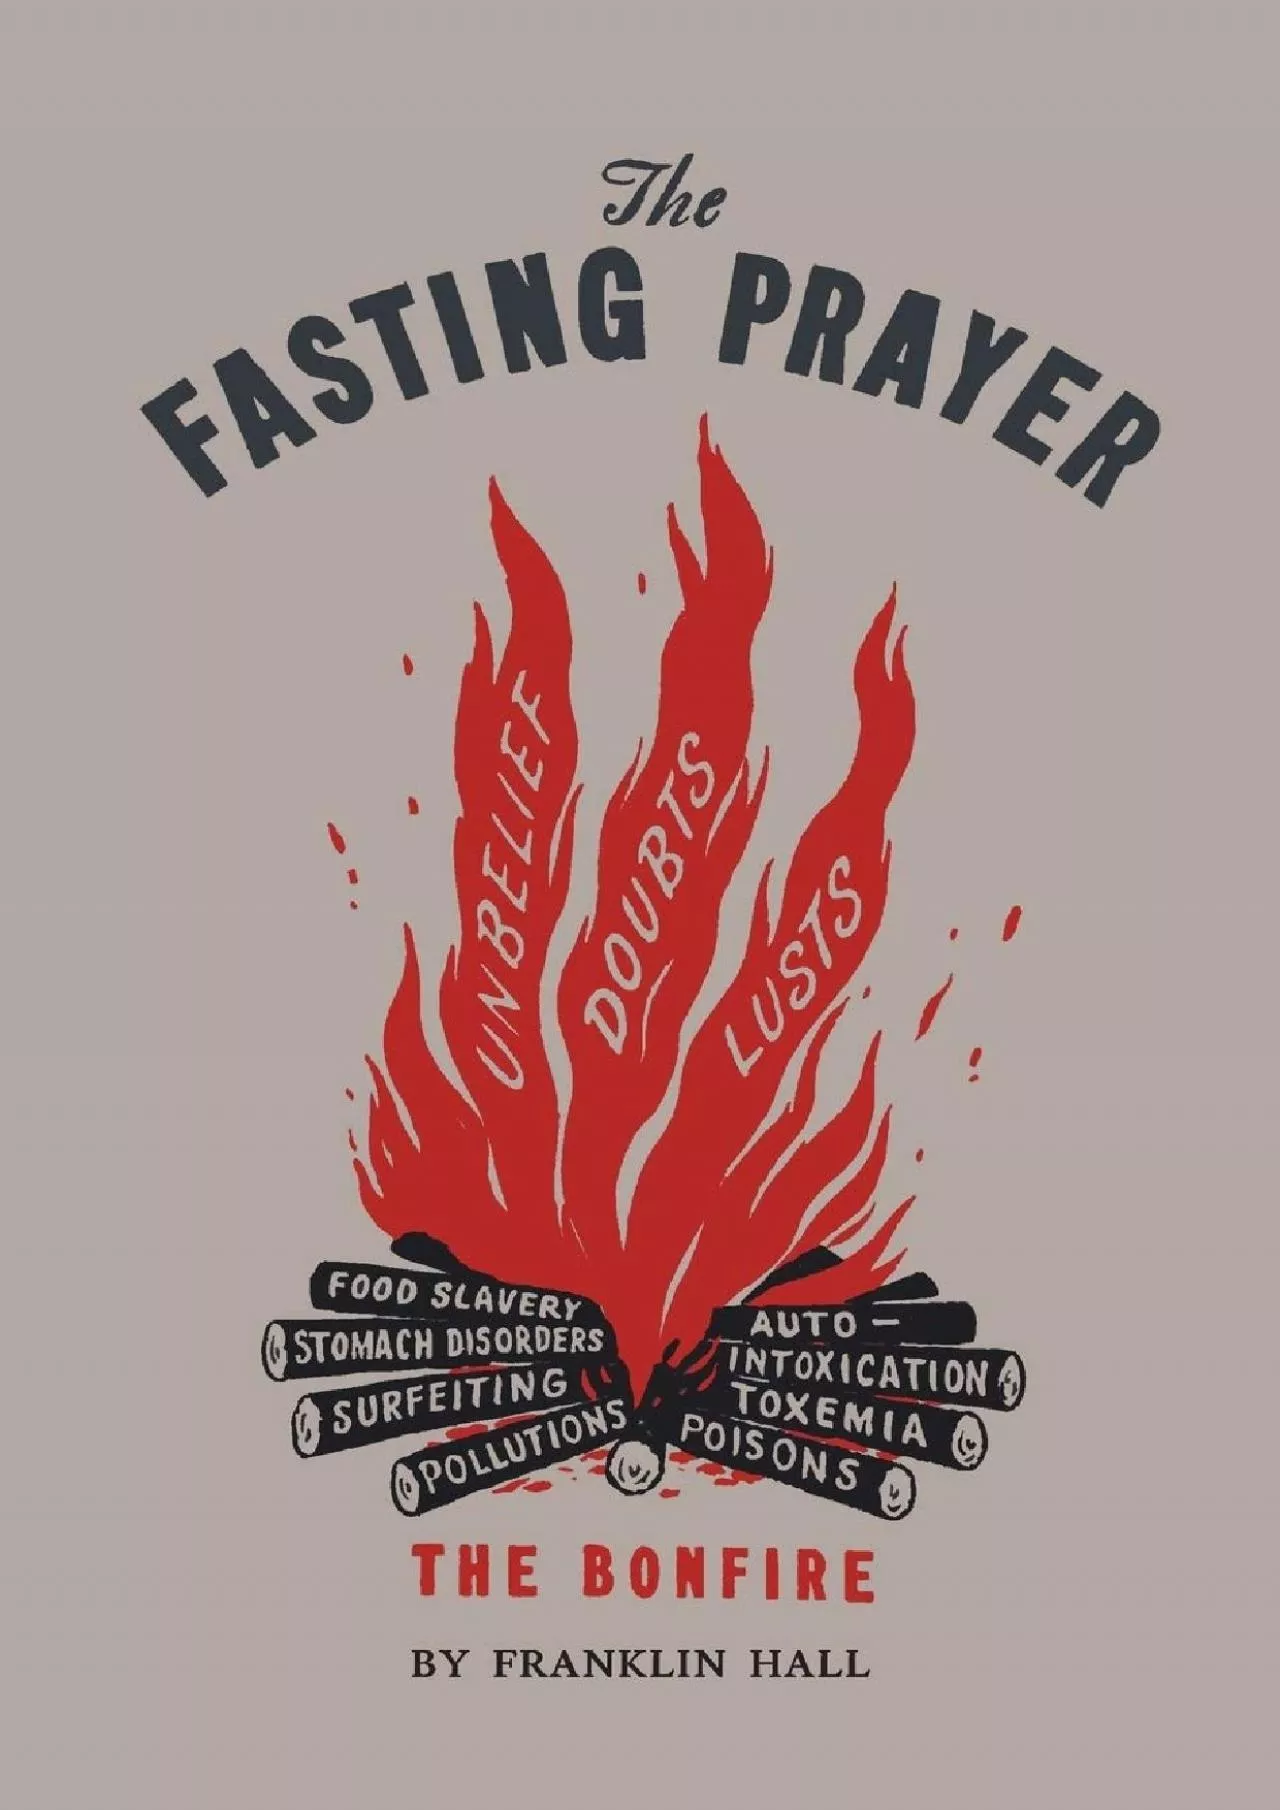 (EBOOK)-The Fasting Prayer